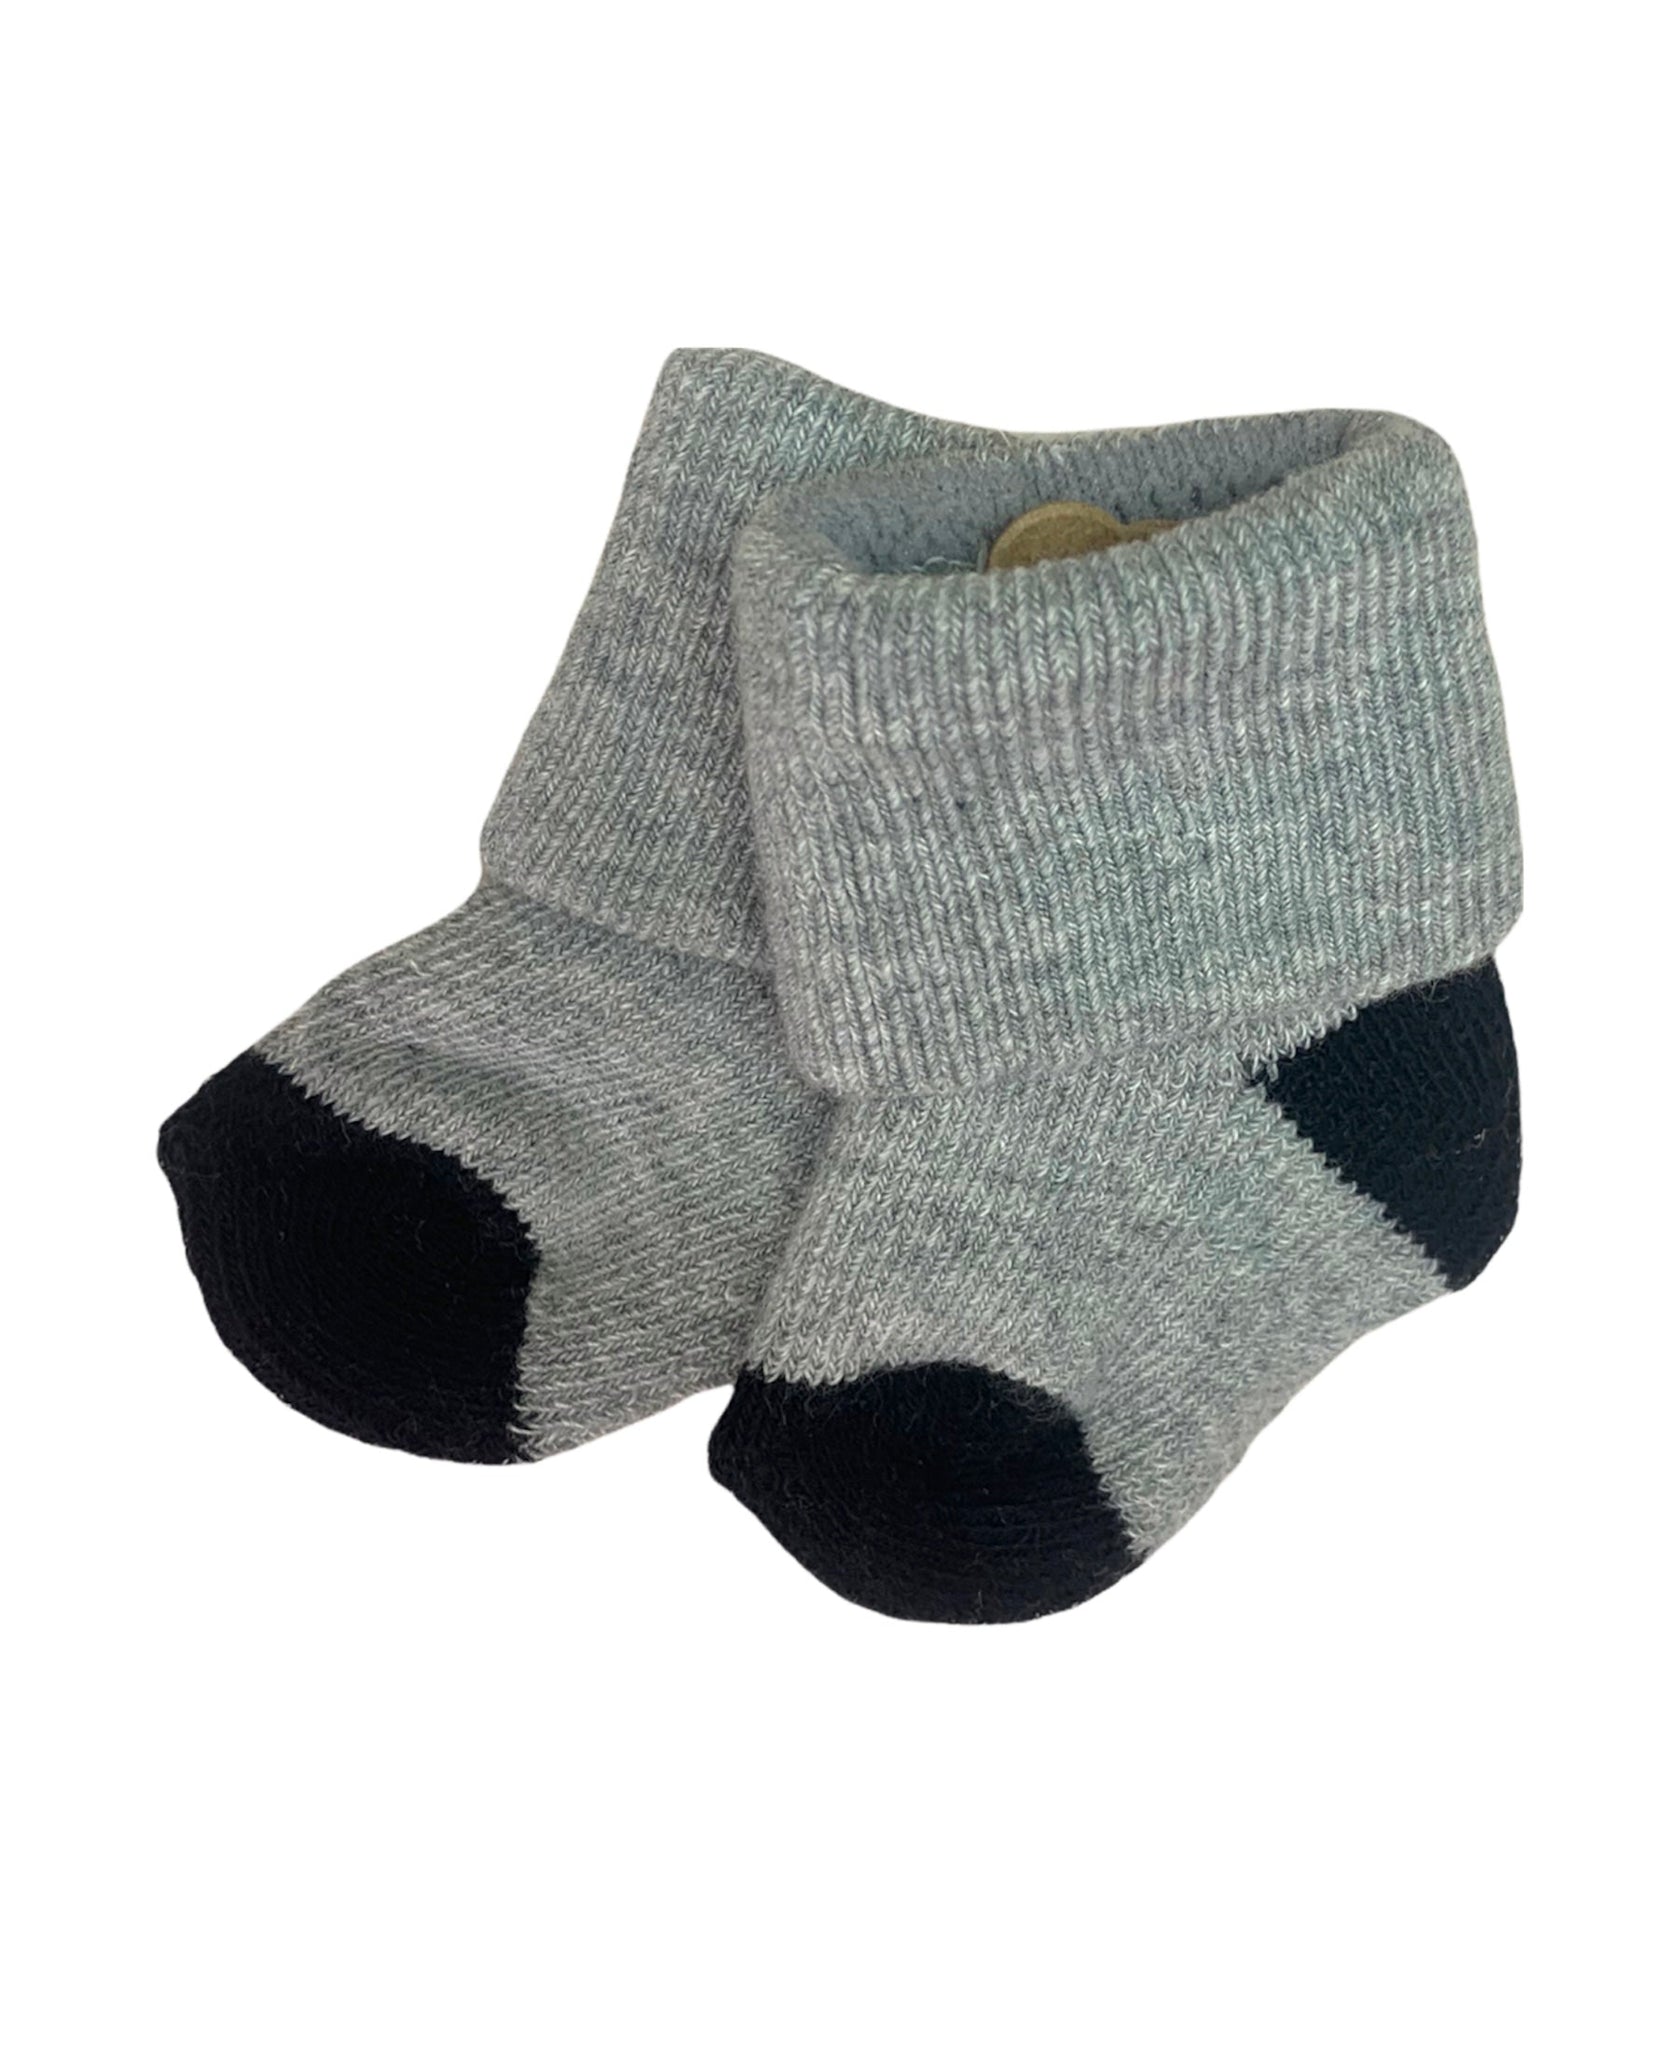 grey socks with black on heel and toe